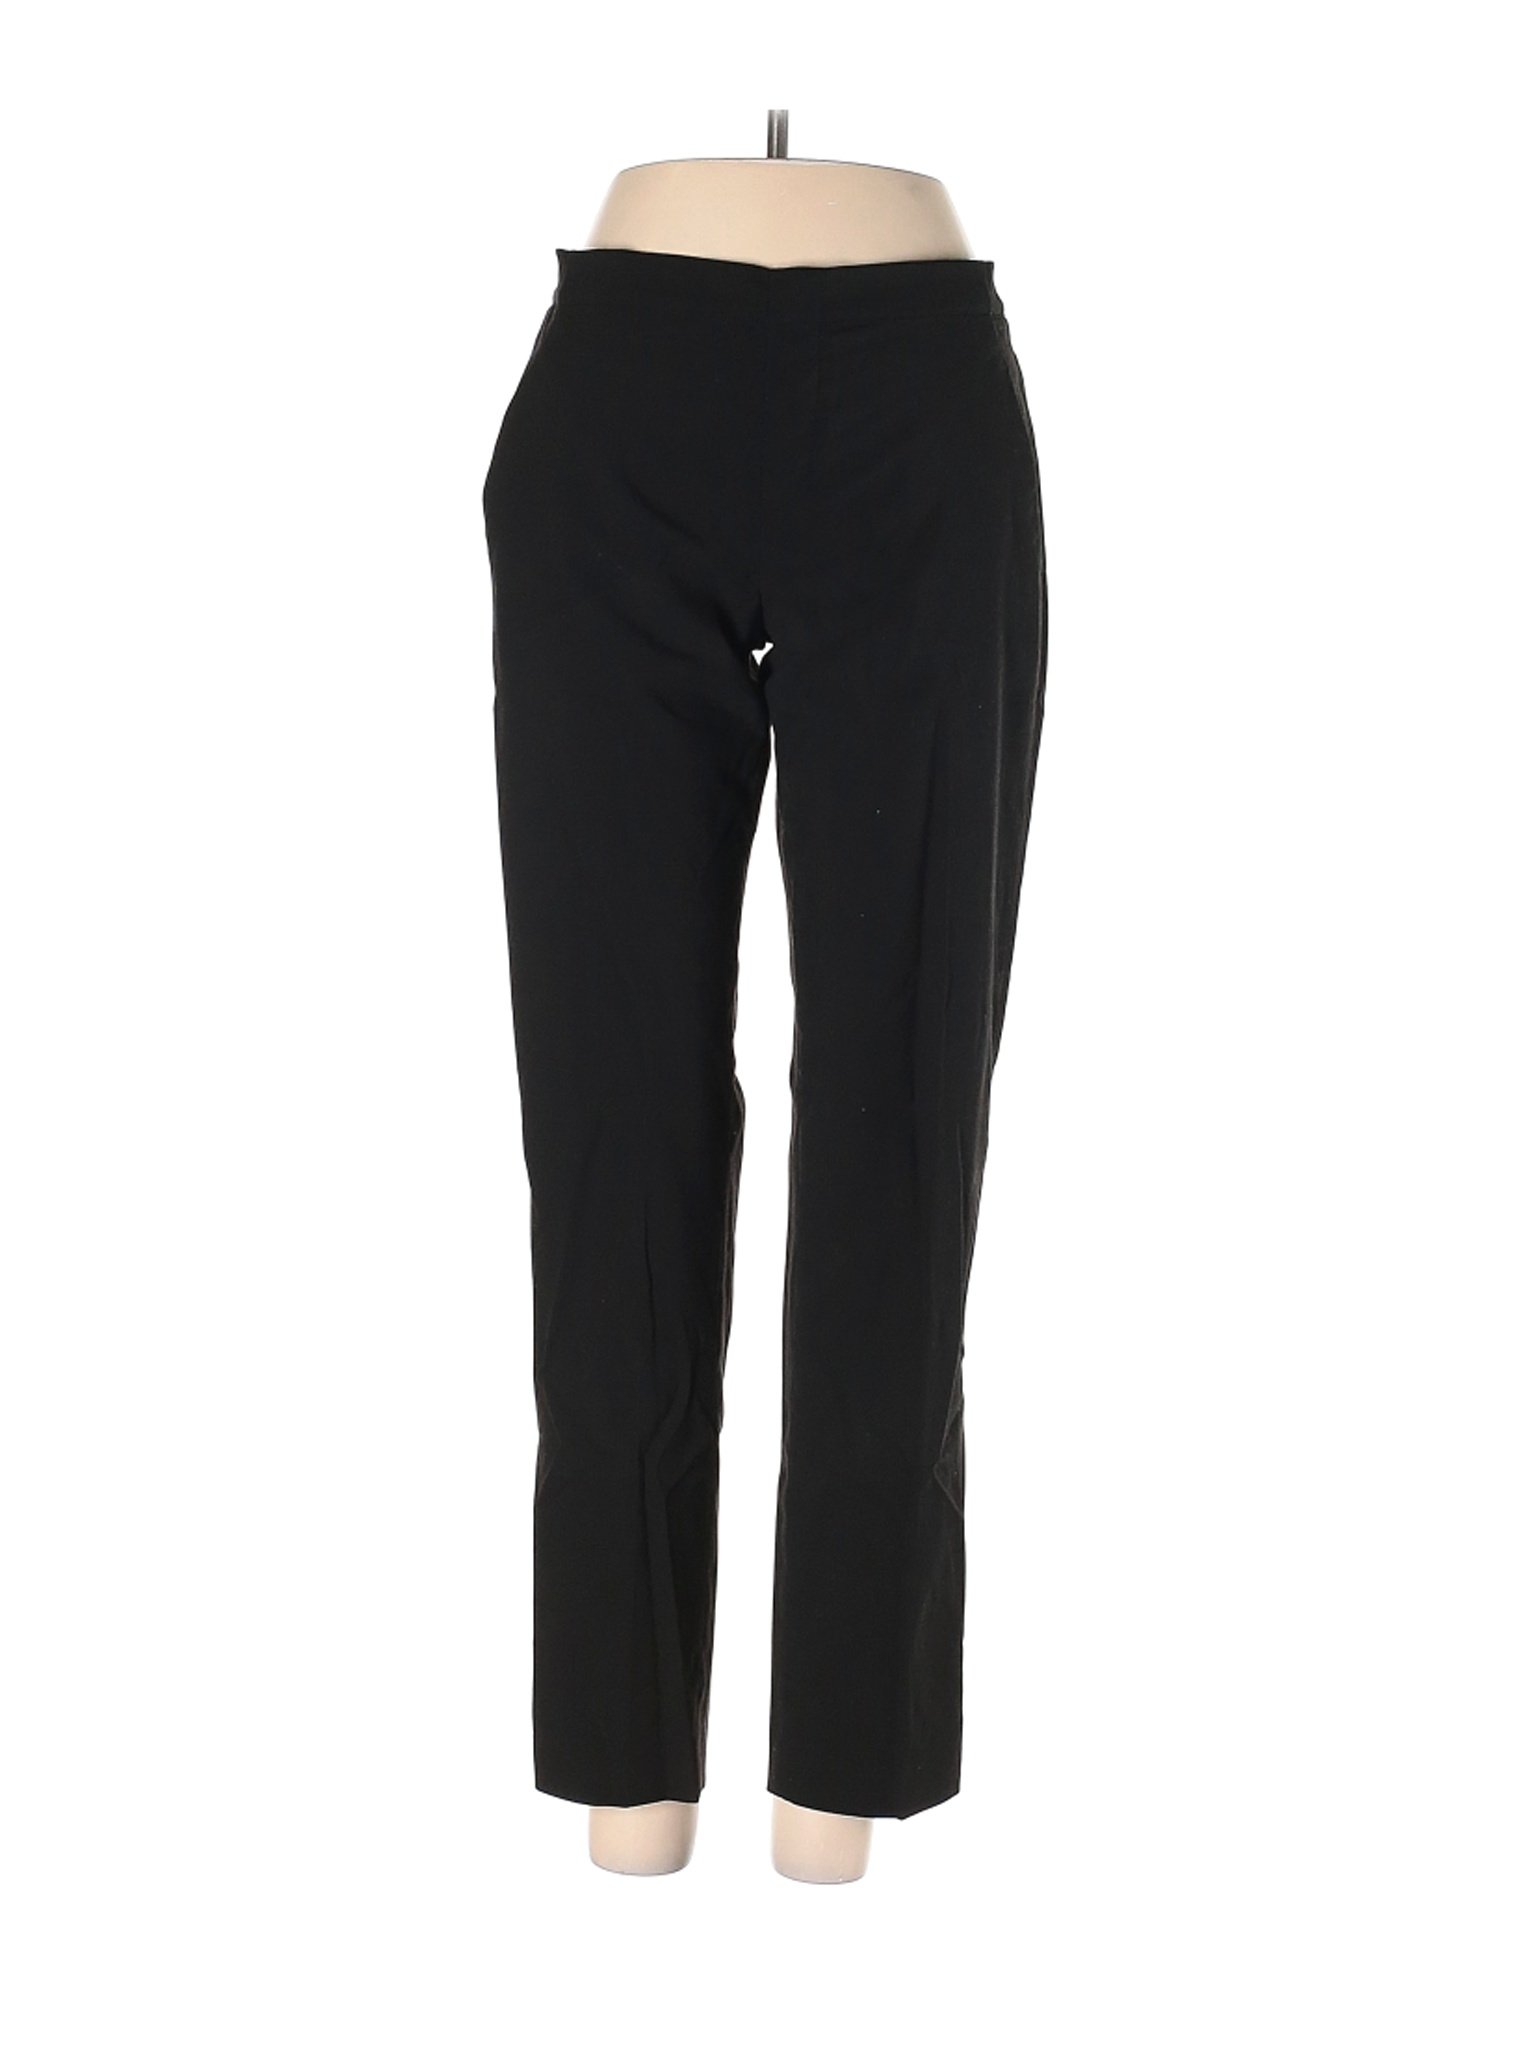 Uniqlo Women Black Casual Pants S | eBay